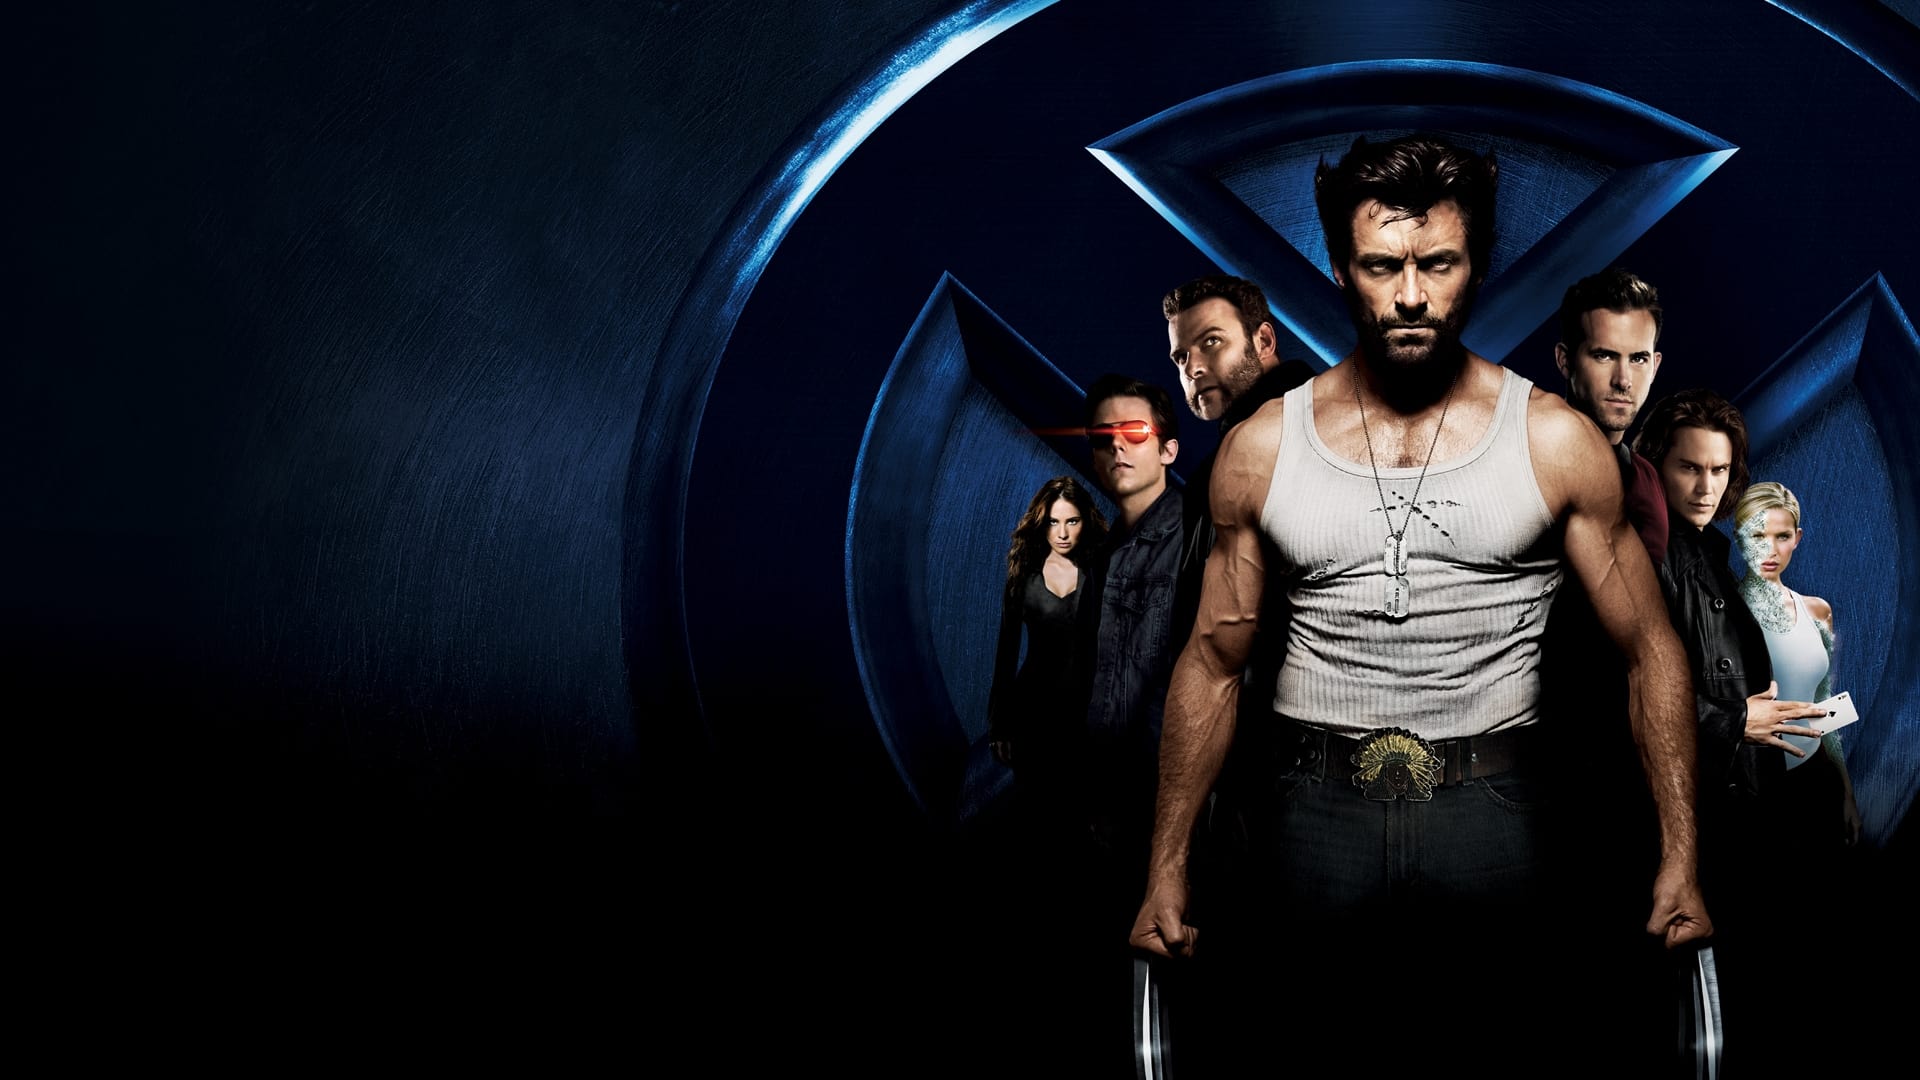 Image du film X-Men Origins : Wolverine 2tkqc9zrxpvsmioomgrgrrrlrhjjpg